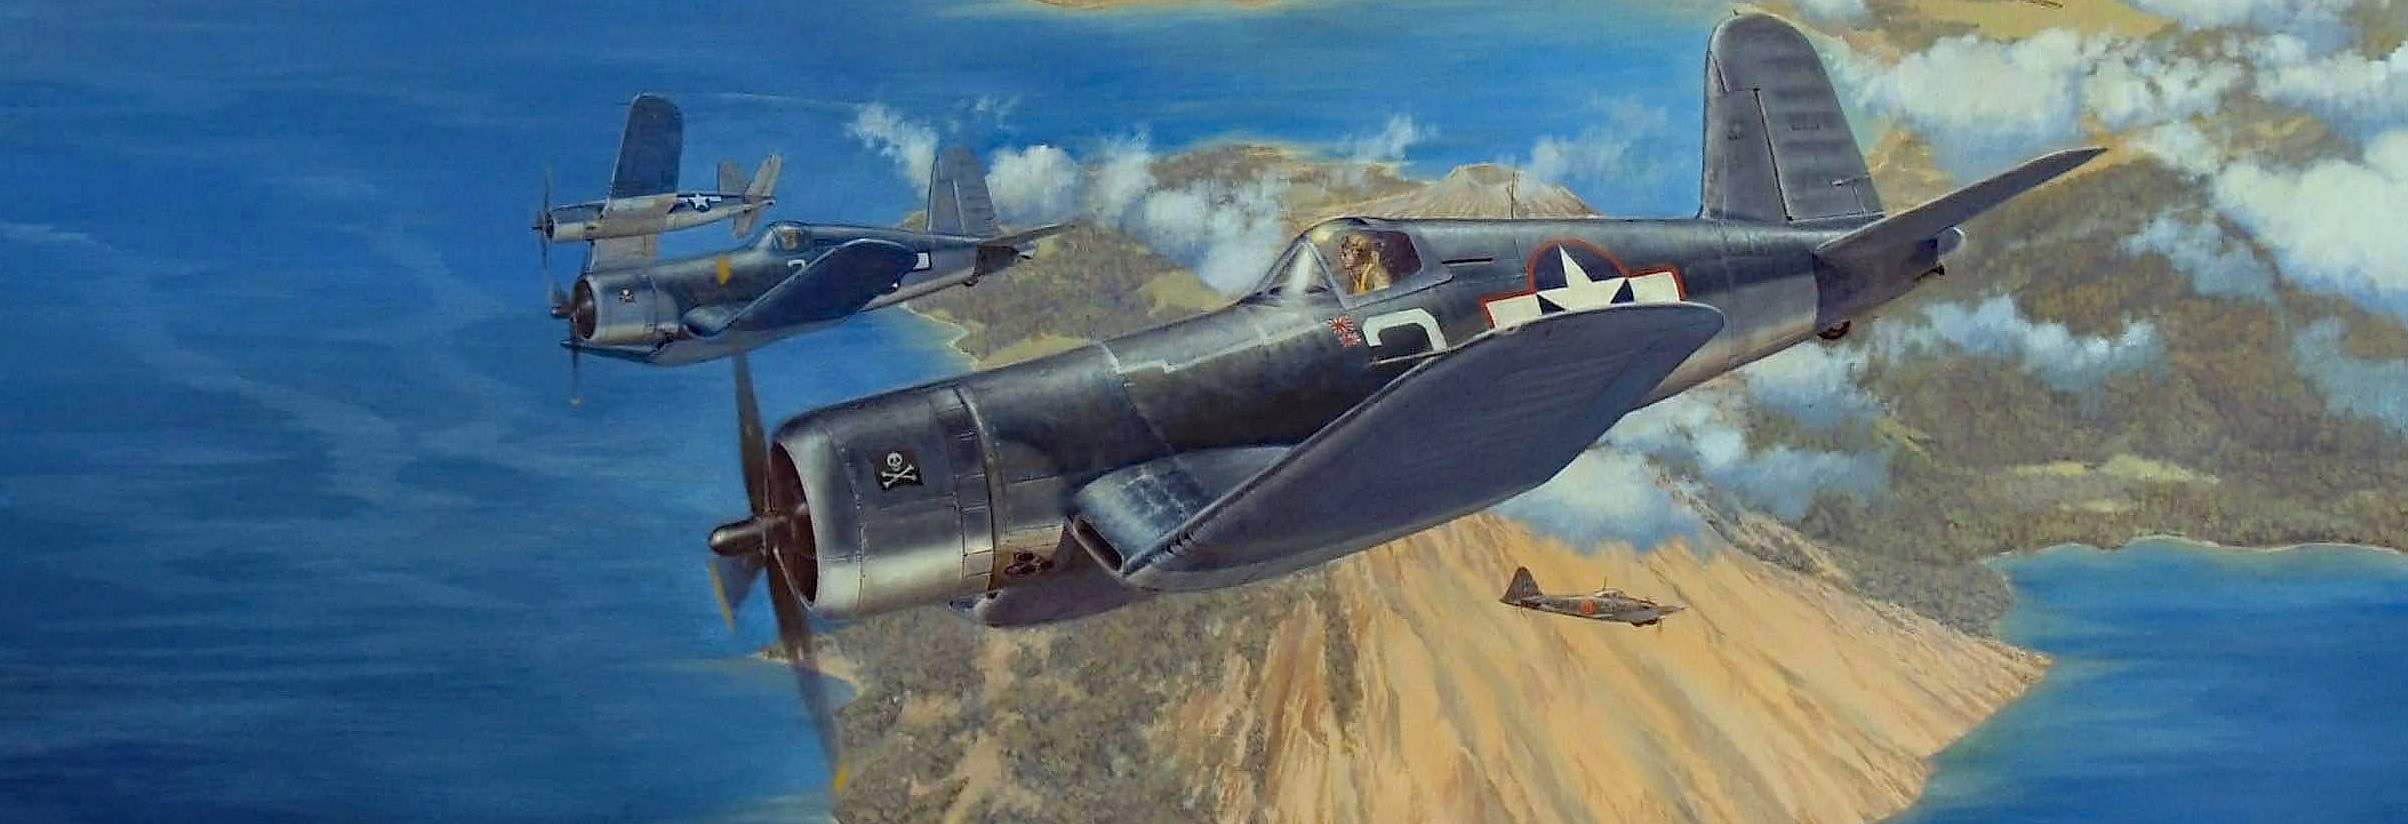 Corsair aviation art